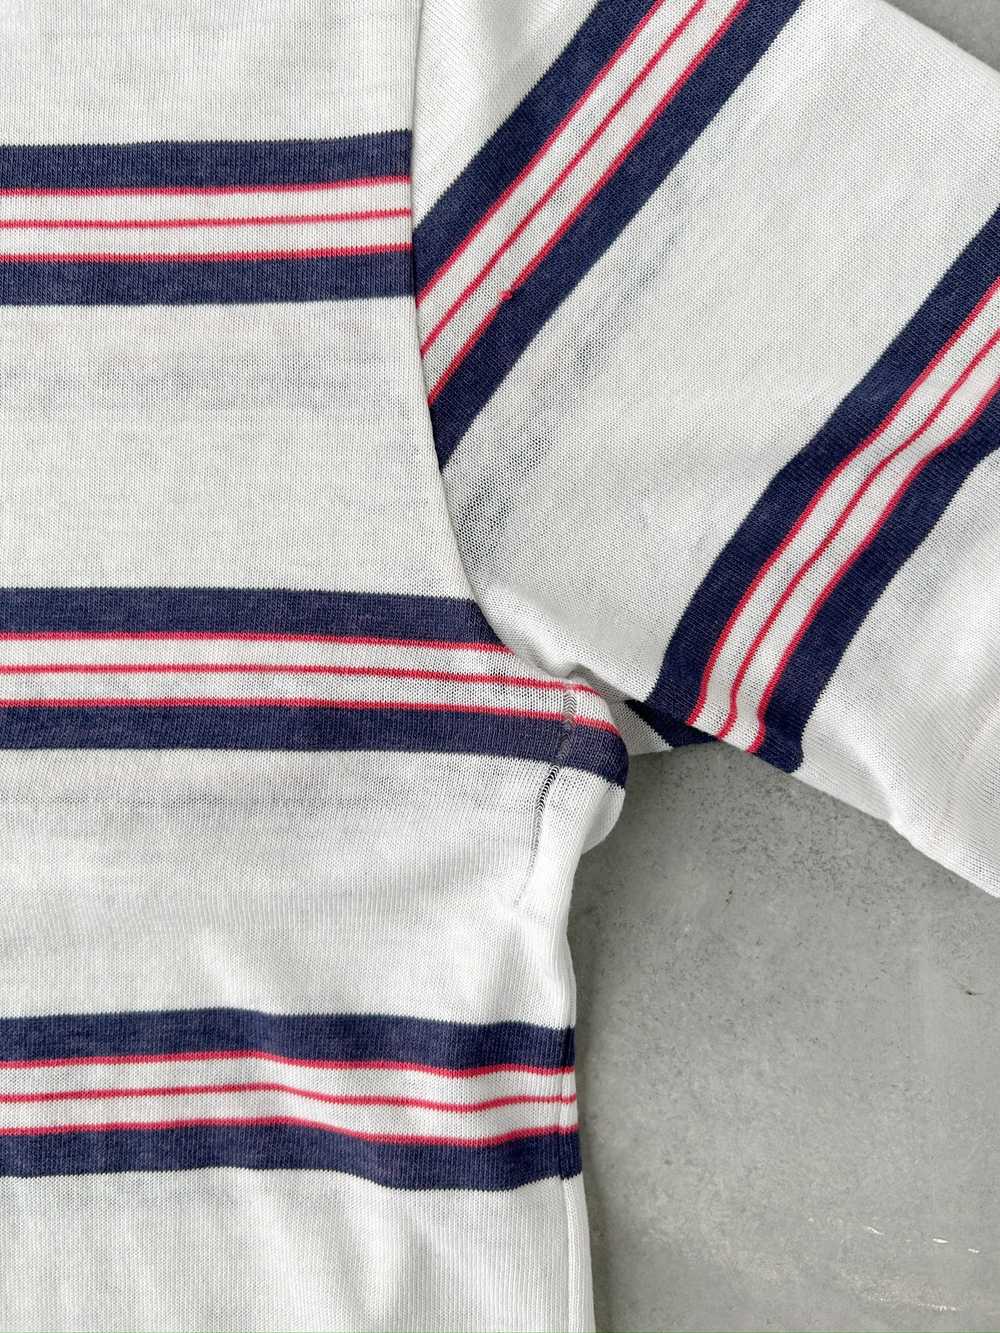 Striped T-Shirt 80's - Medium - image 3